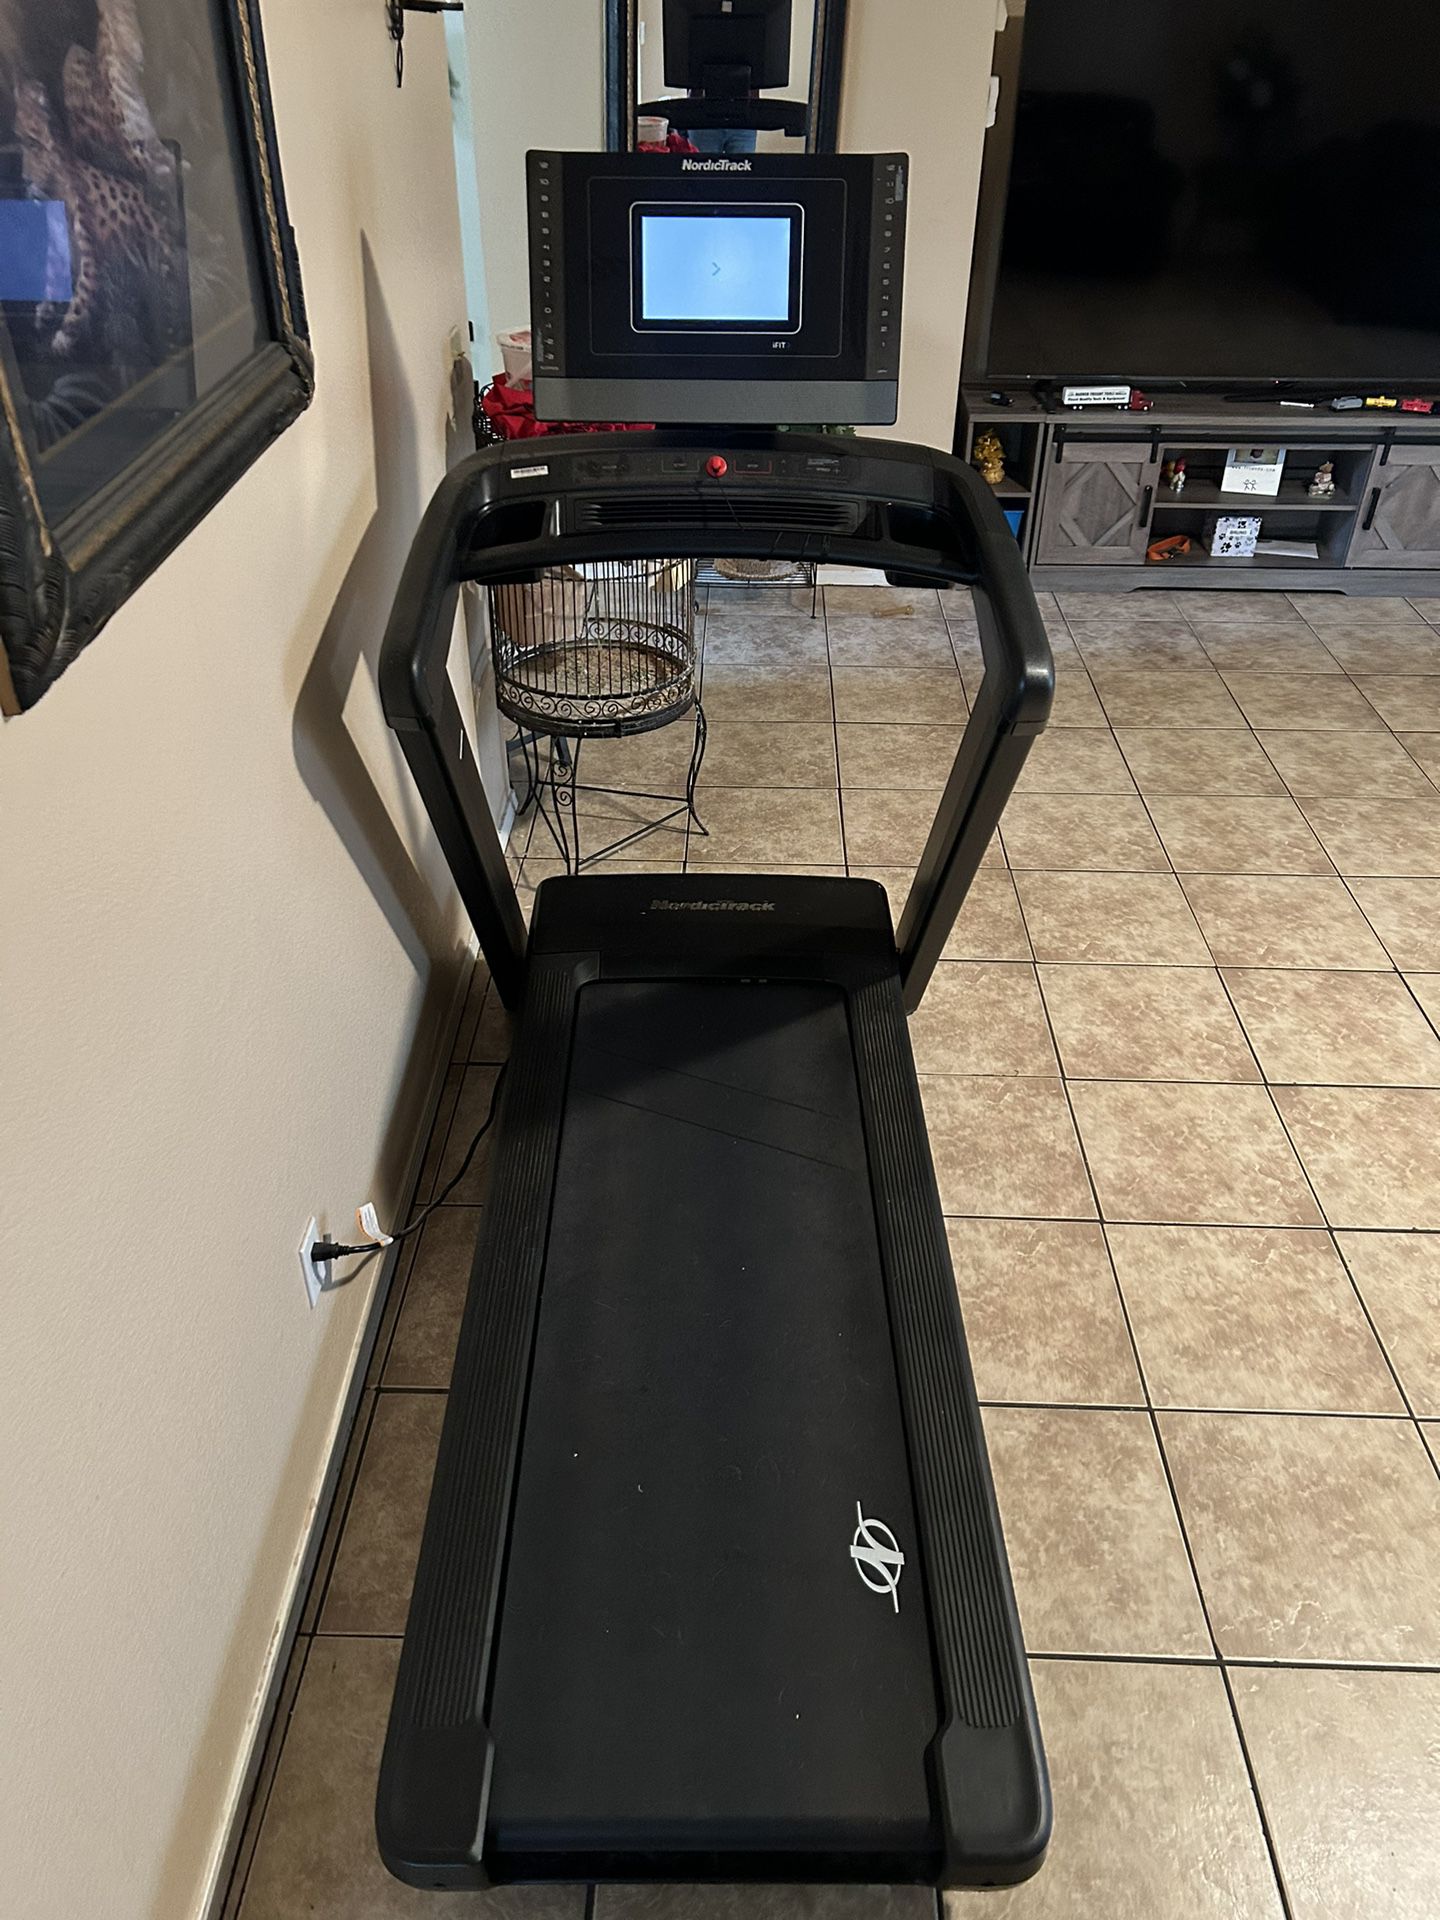 NordicTrack IFit Treadmill 